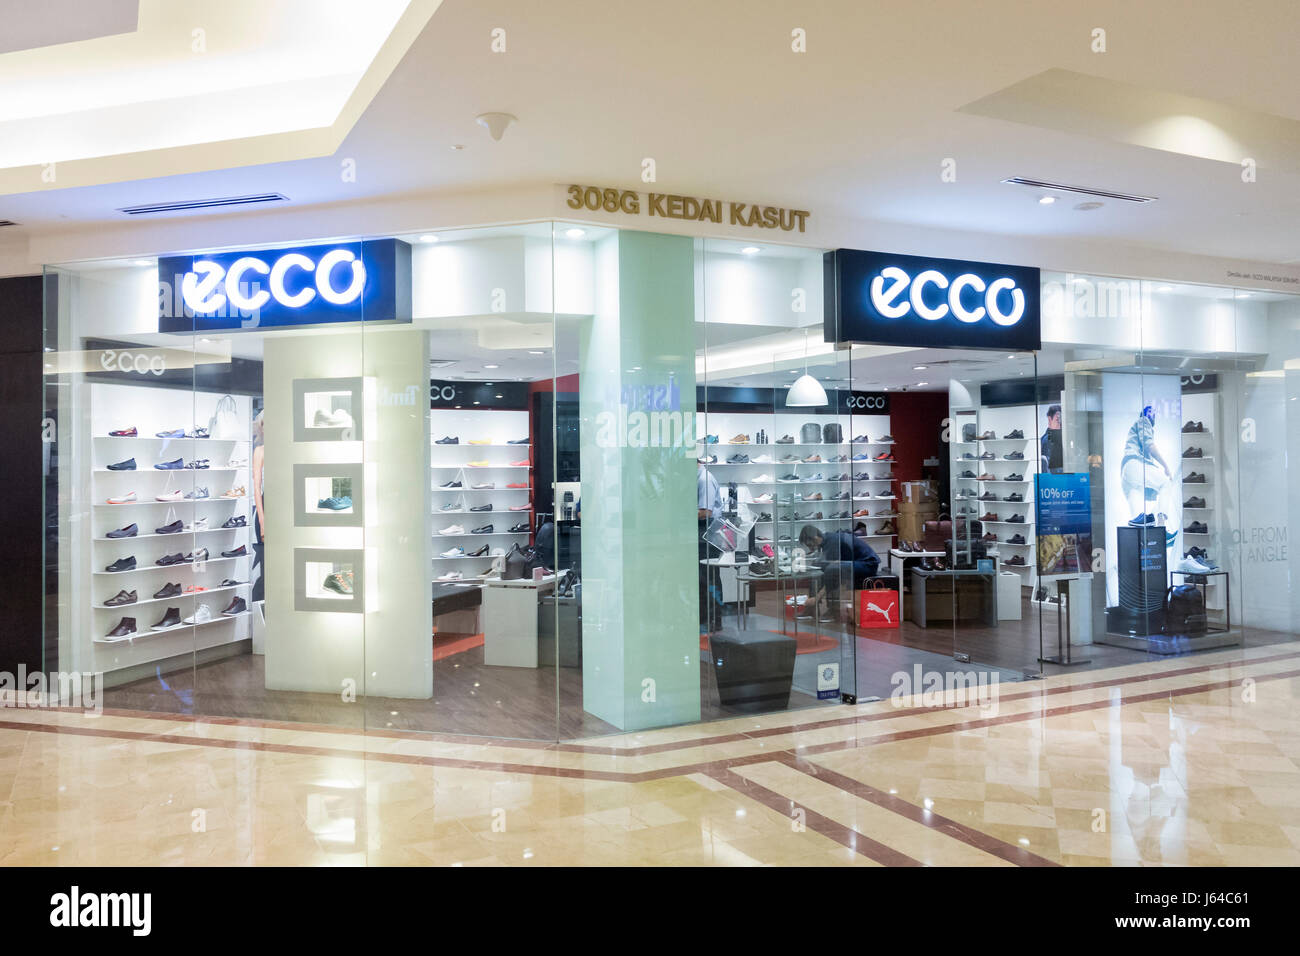 Ecco shop, Malaysia Stock Photo - Alamy